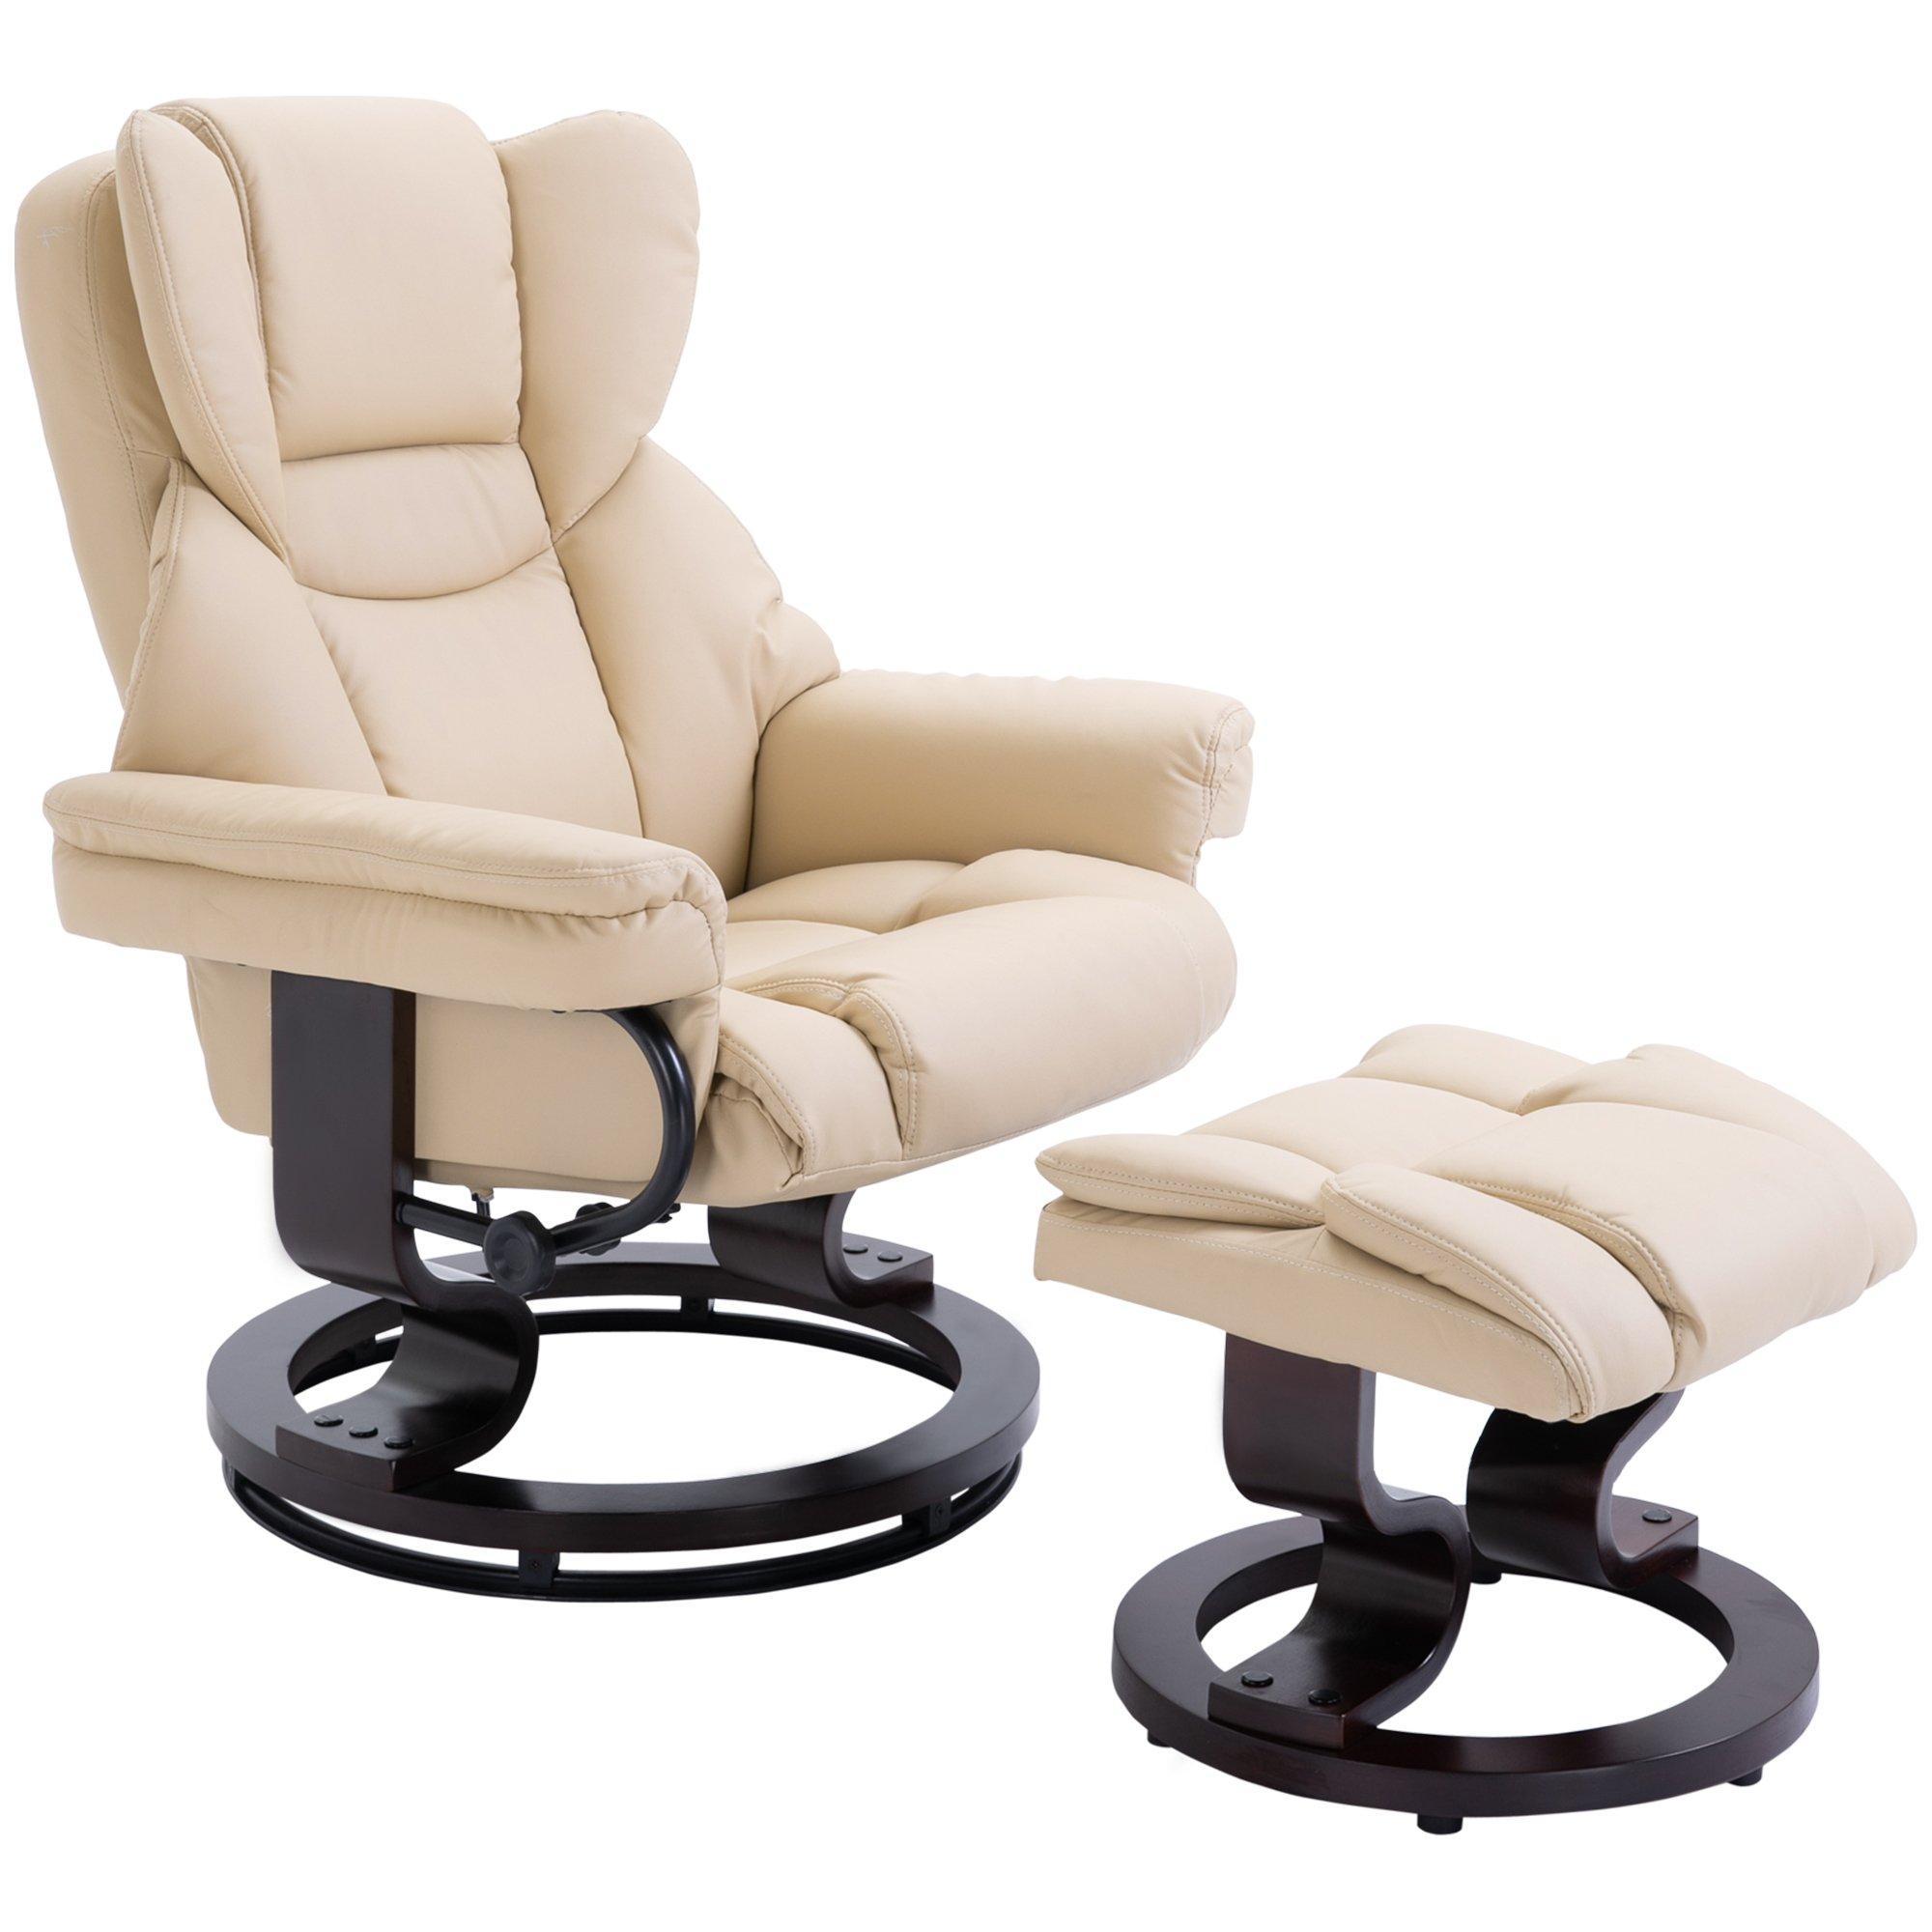 Padded PU Leather Manual Reclining Armchair Sofa Chair Footstool